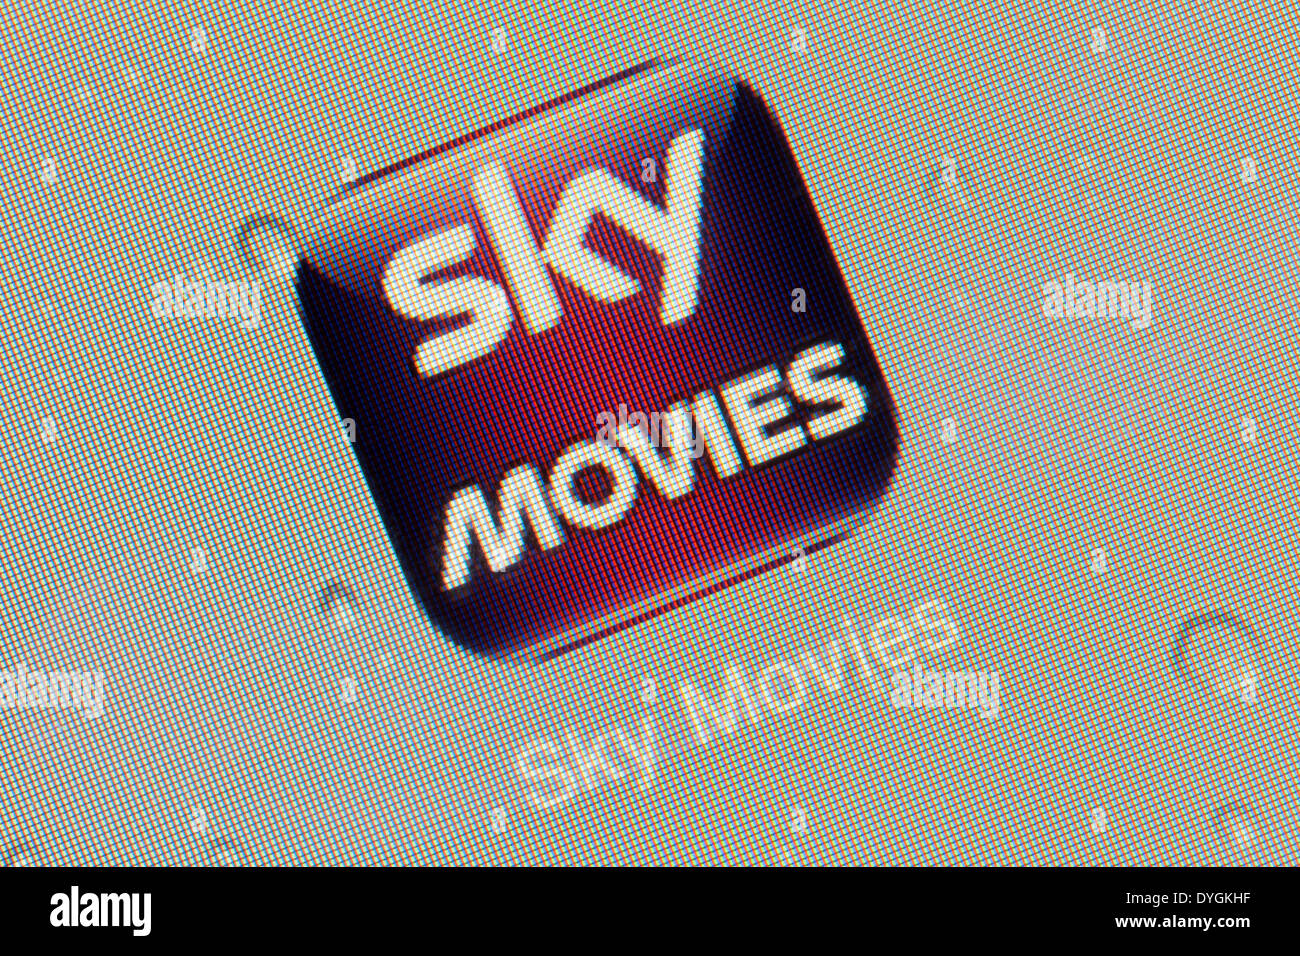 Sky Movies app logo icon on an iPad Stock Photo